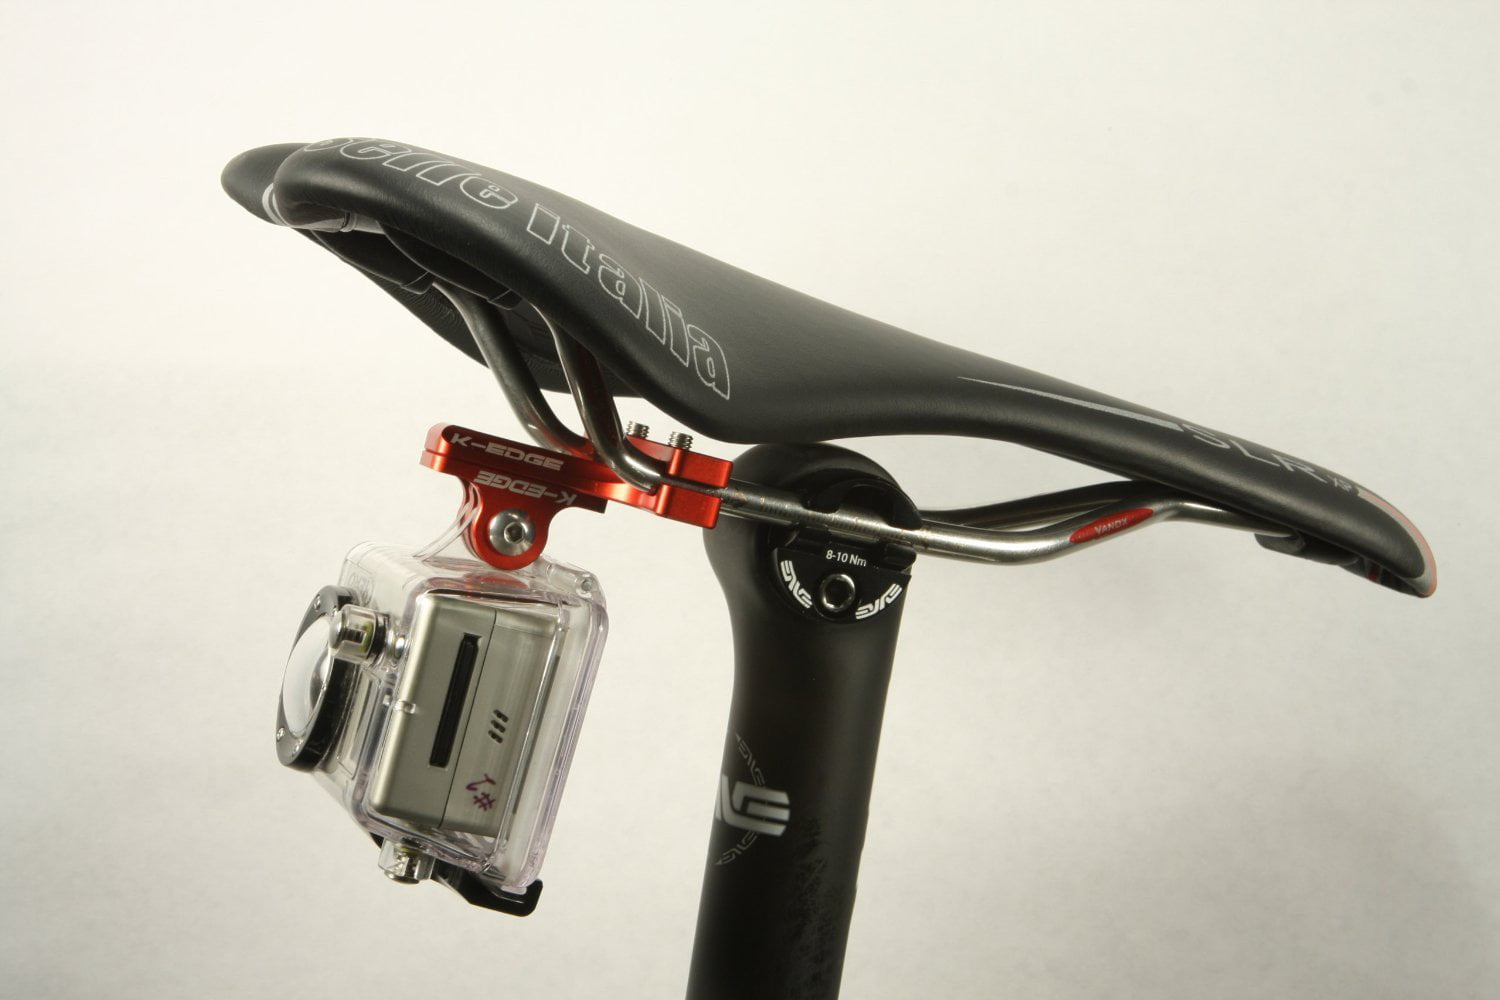 Shimano Details about   Shimano Pro Bicycle Saddle Rail Camera Mount Blue 